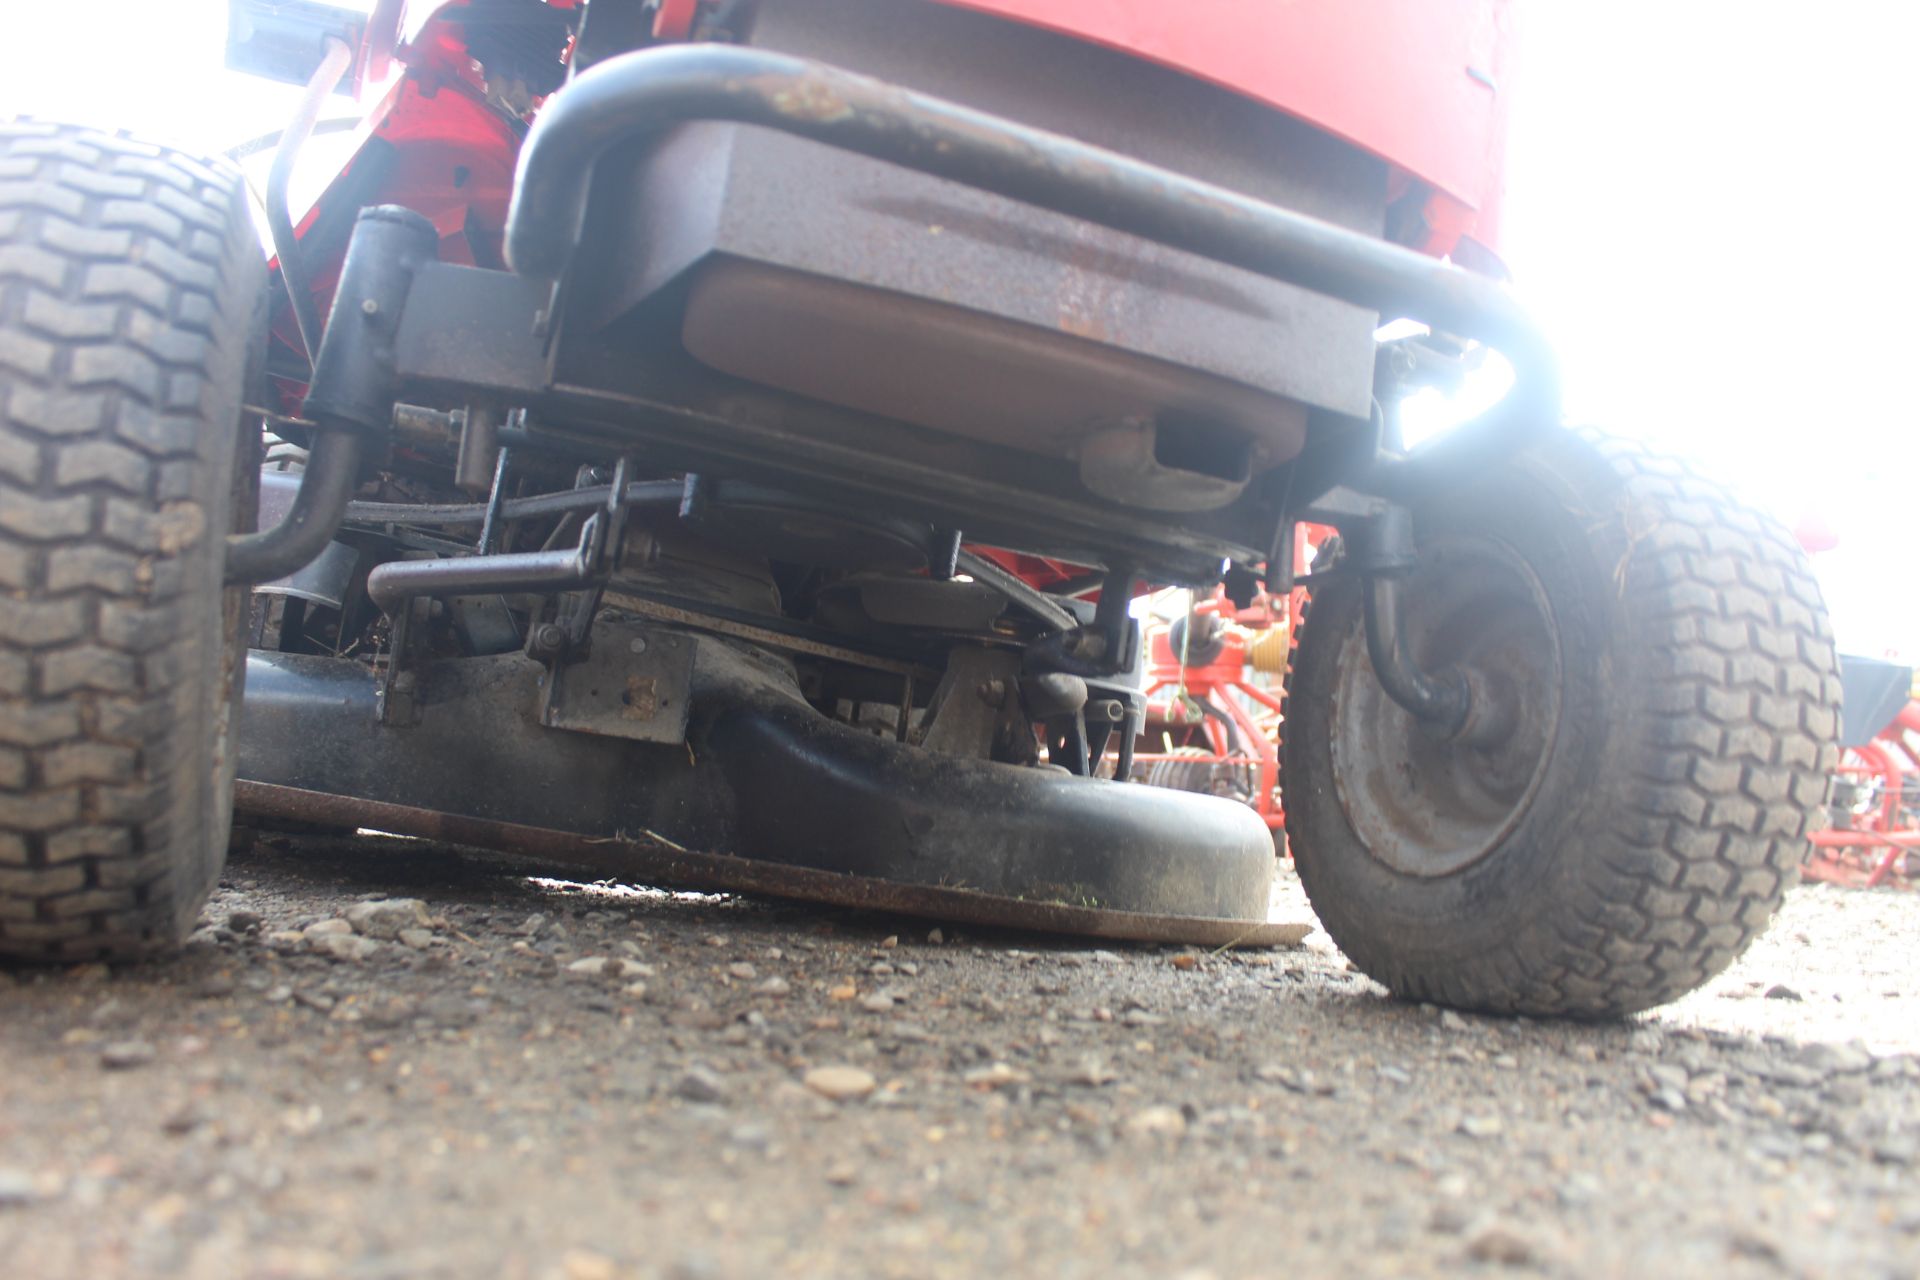 Honda Hydrostatic 2113 ride on mower. For spares or repair. Key held. - Image 6 of 20